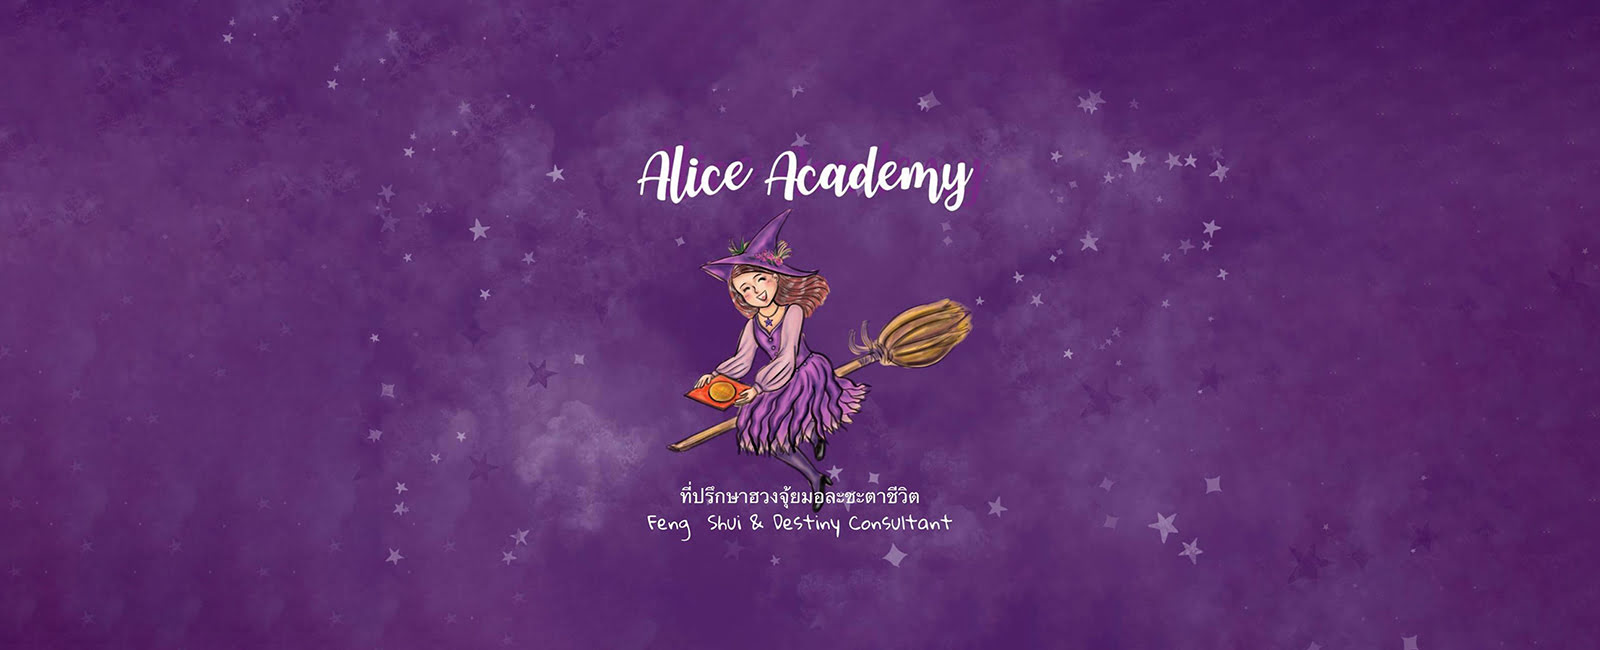 Alice_Academy.jpg